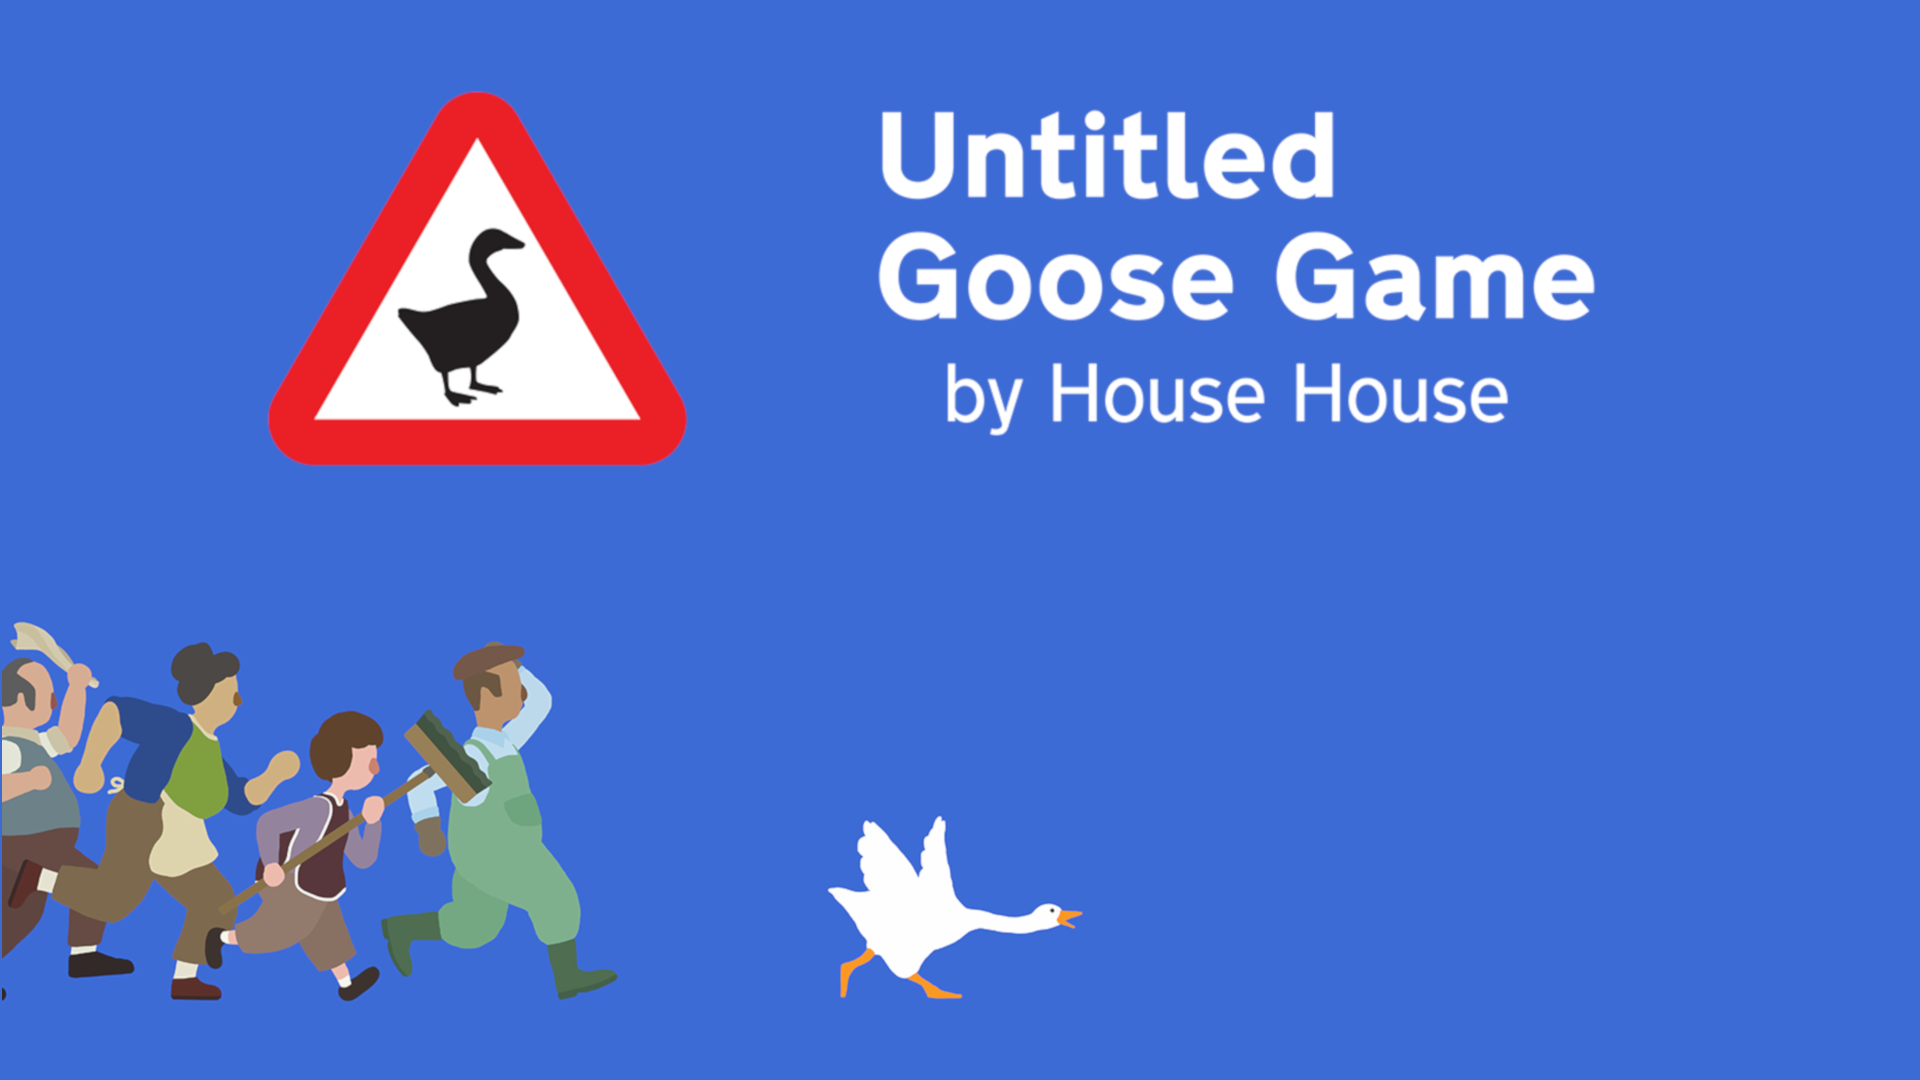 untitled goose game price download